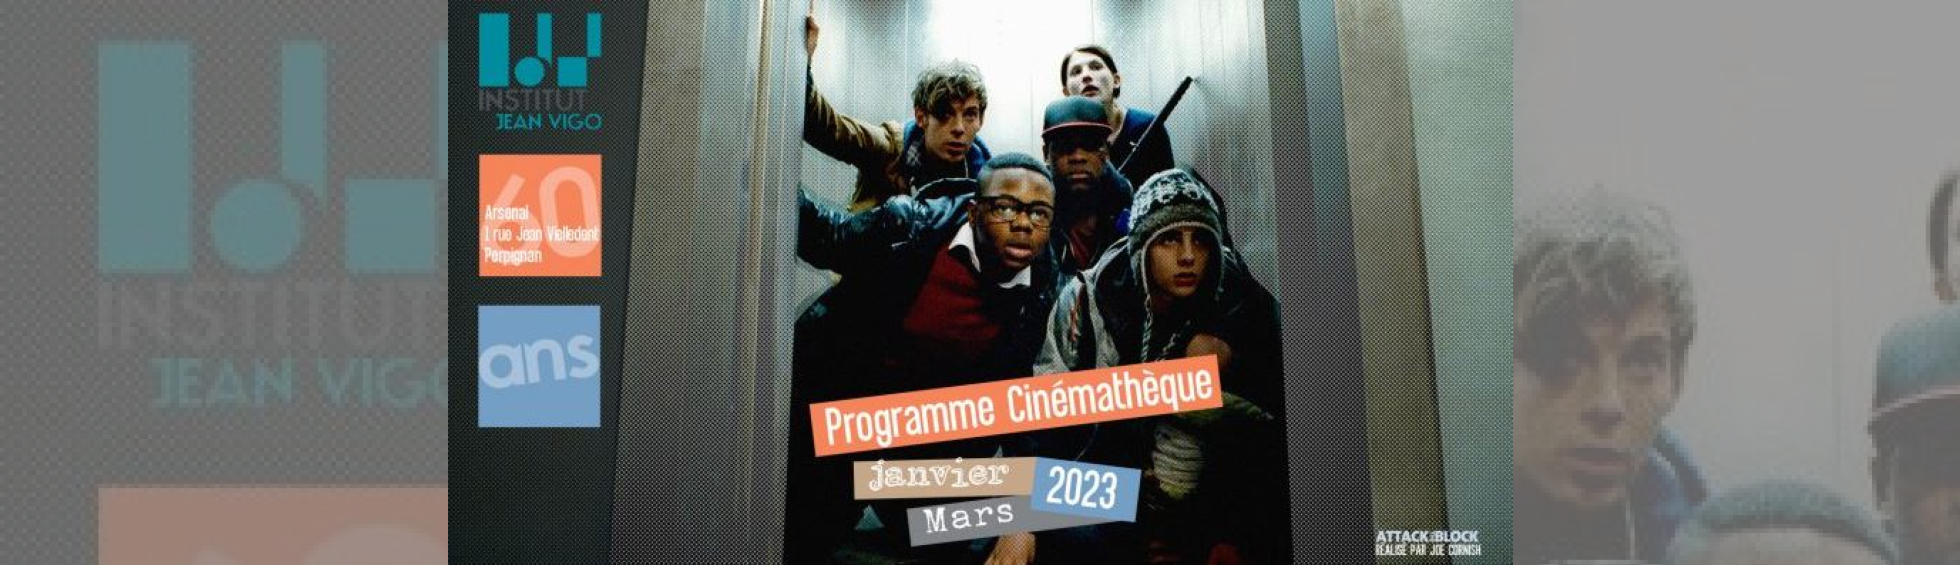 Institut Jean Vigo - affiche programme janvier  à mars 